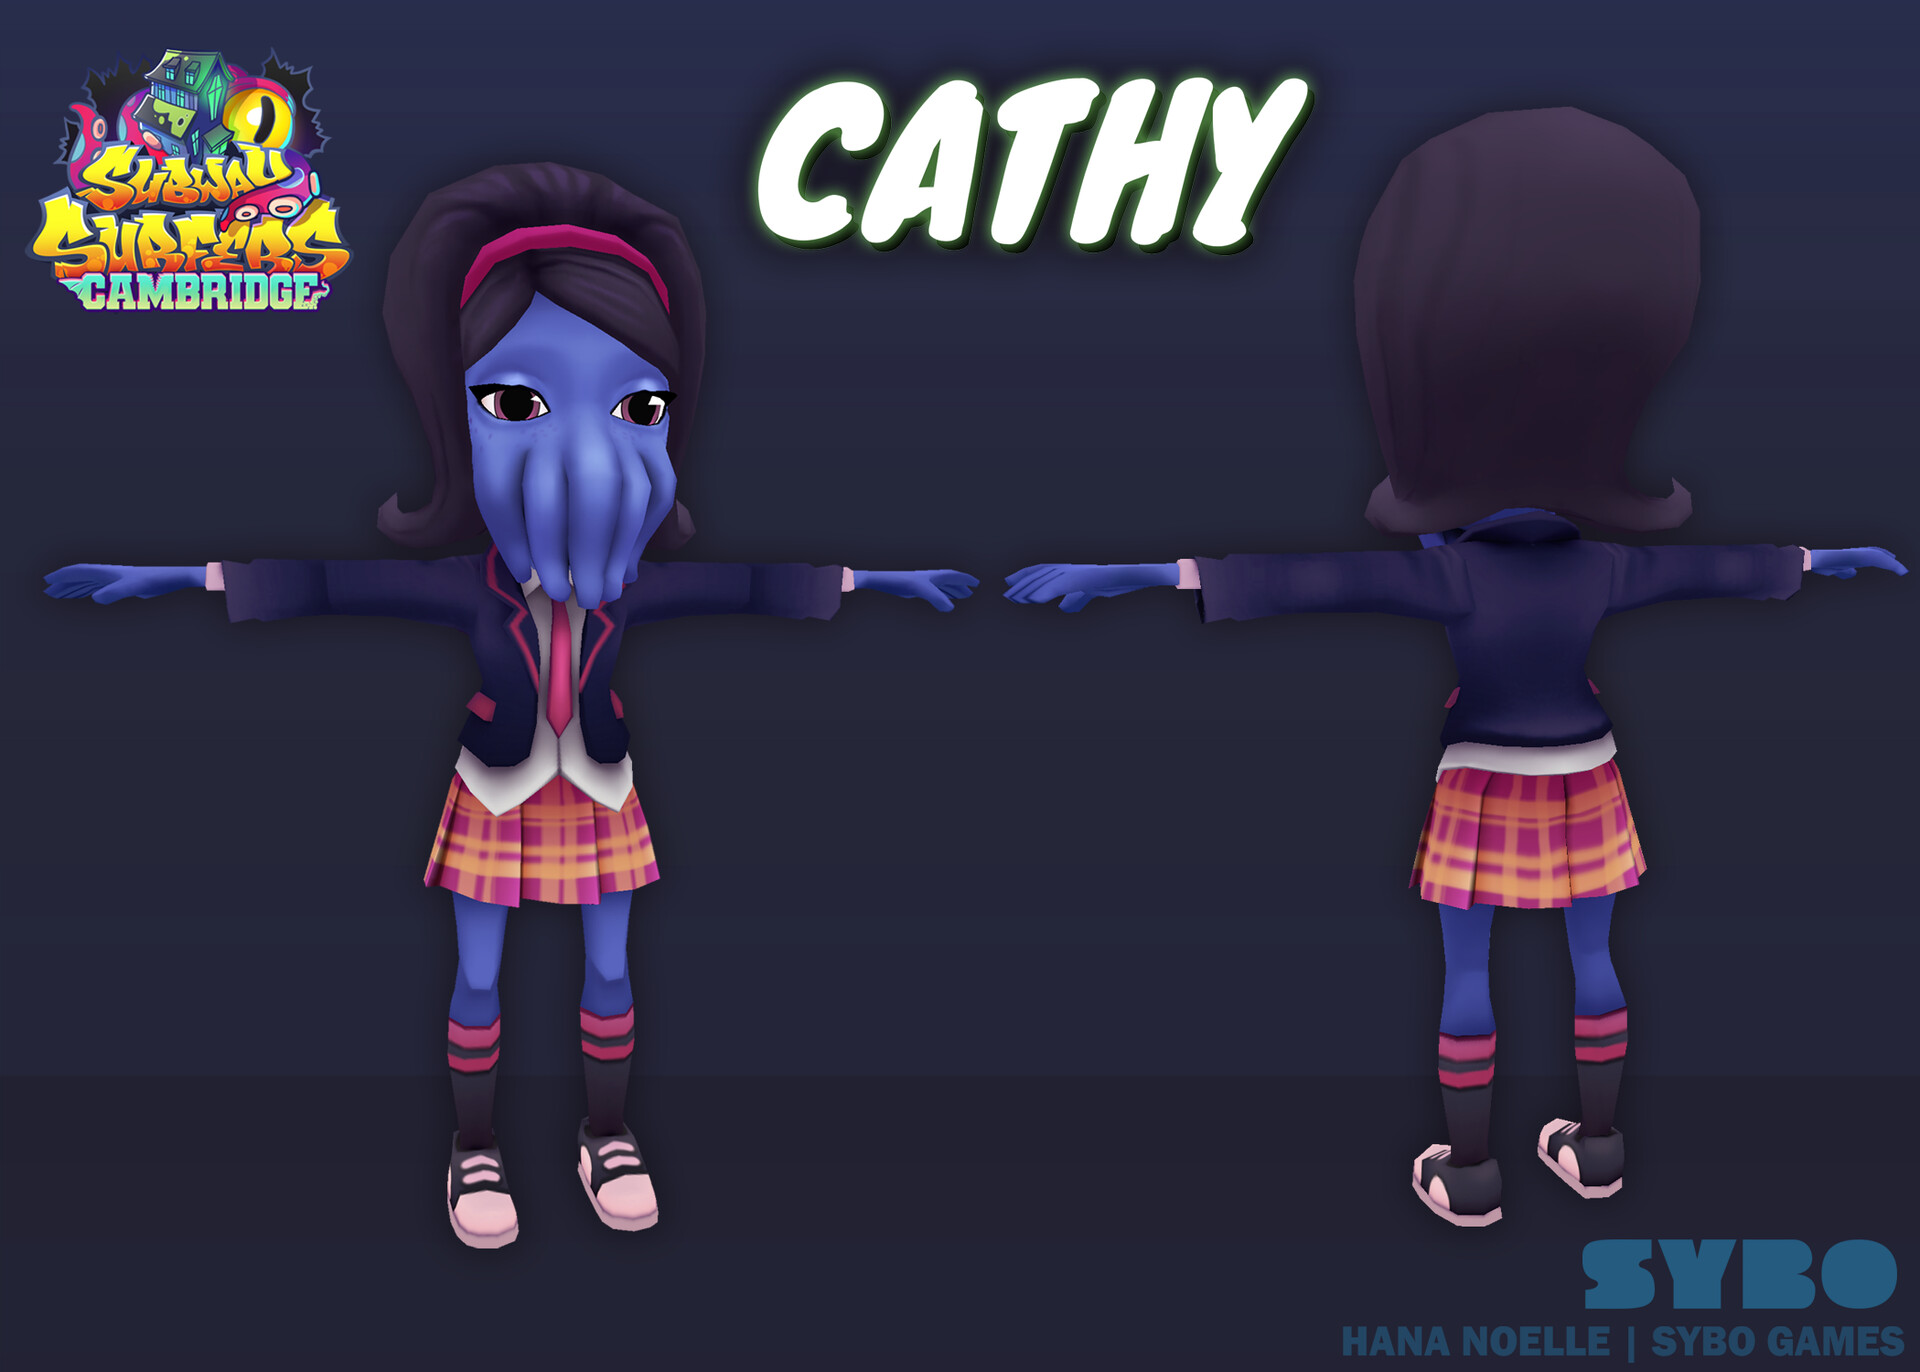 Subway Surfers Halloween 2020 - Cambridge - New Characters Cathy